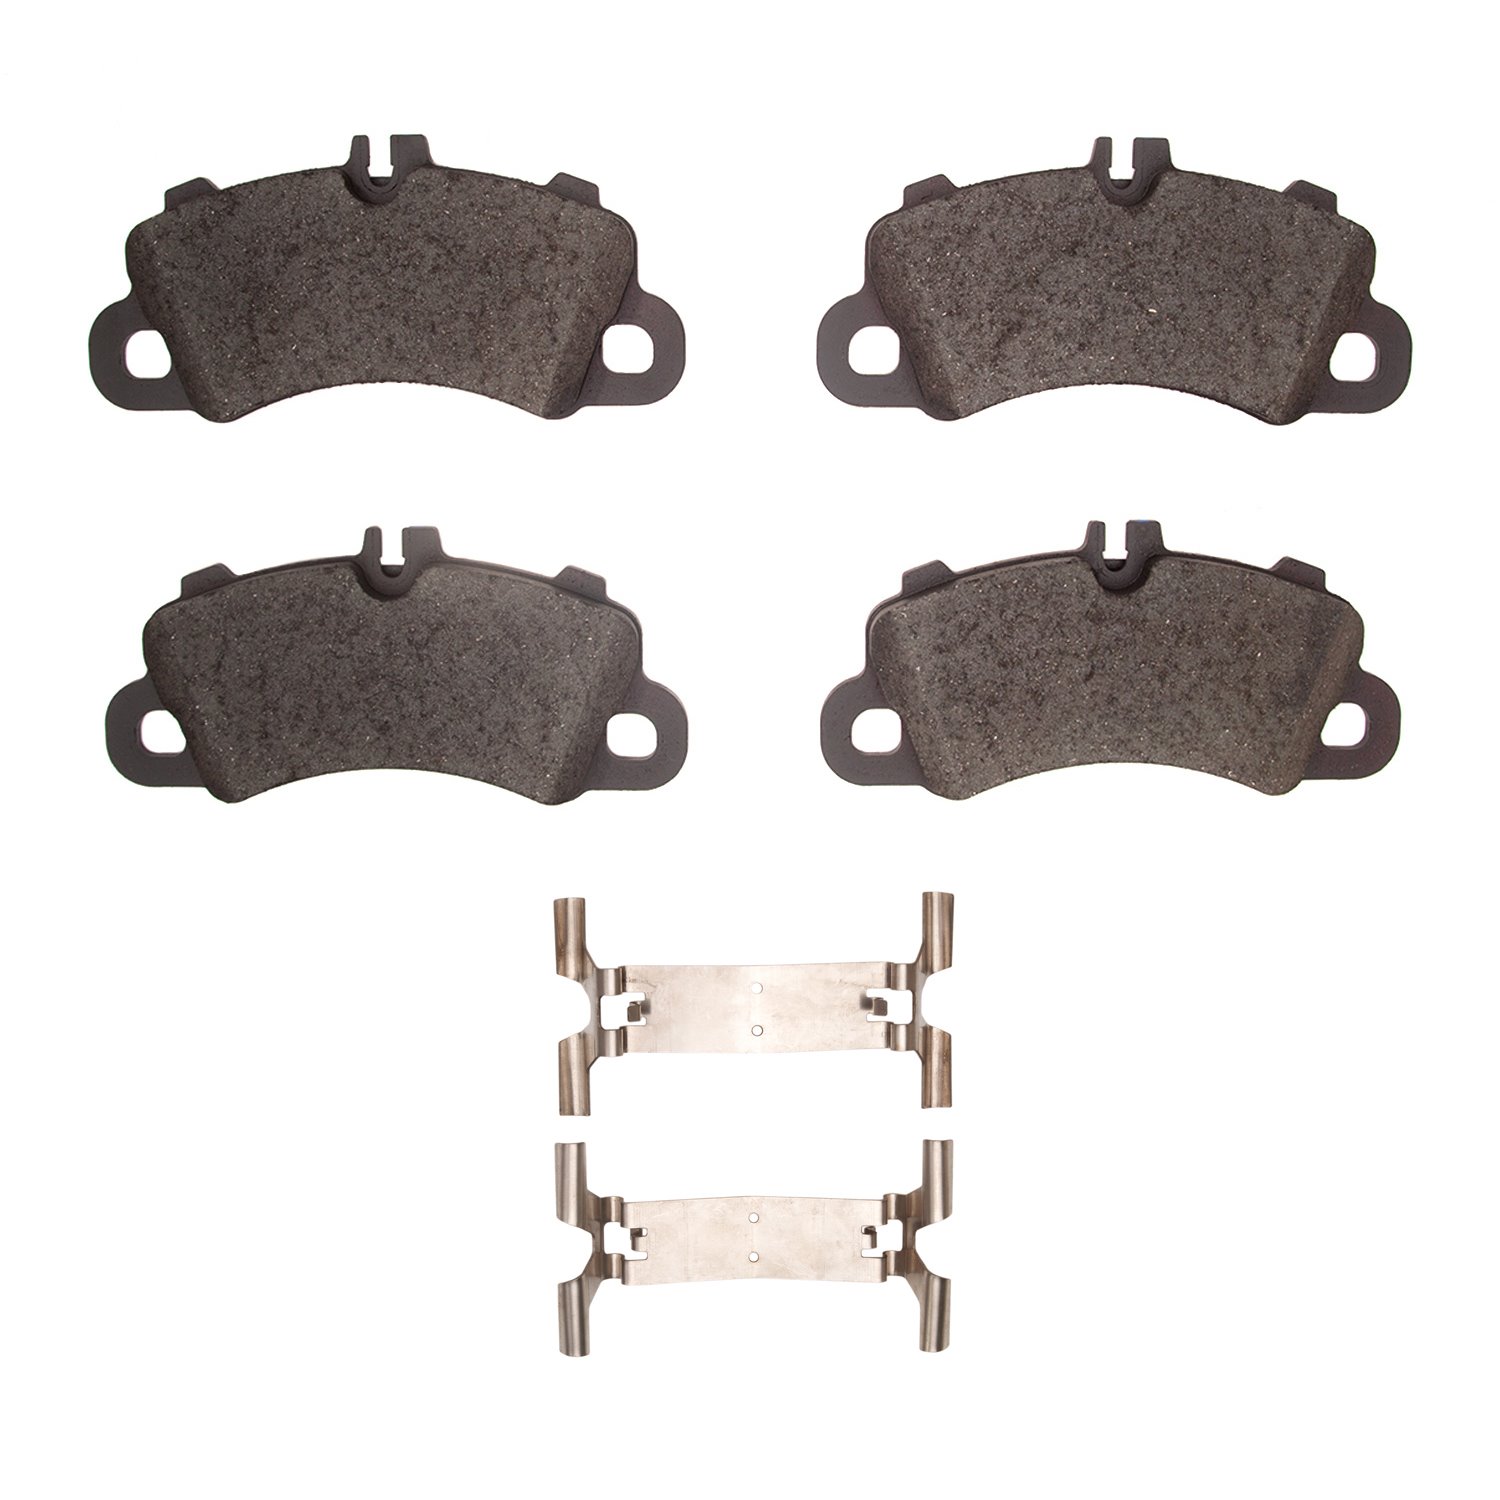 1551-2192-01 5000 Advanced Low-Metallic Brake Pads & Hardware Kit, 2019-2020 Porsche, Position: Front